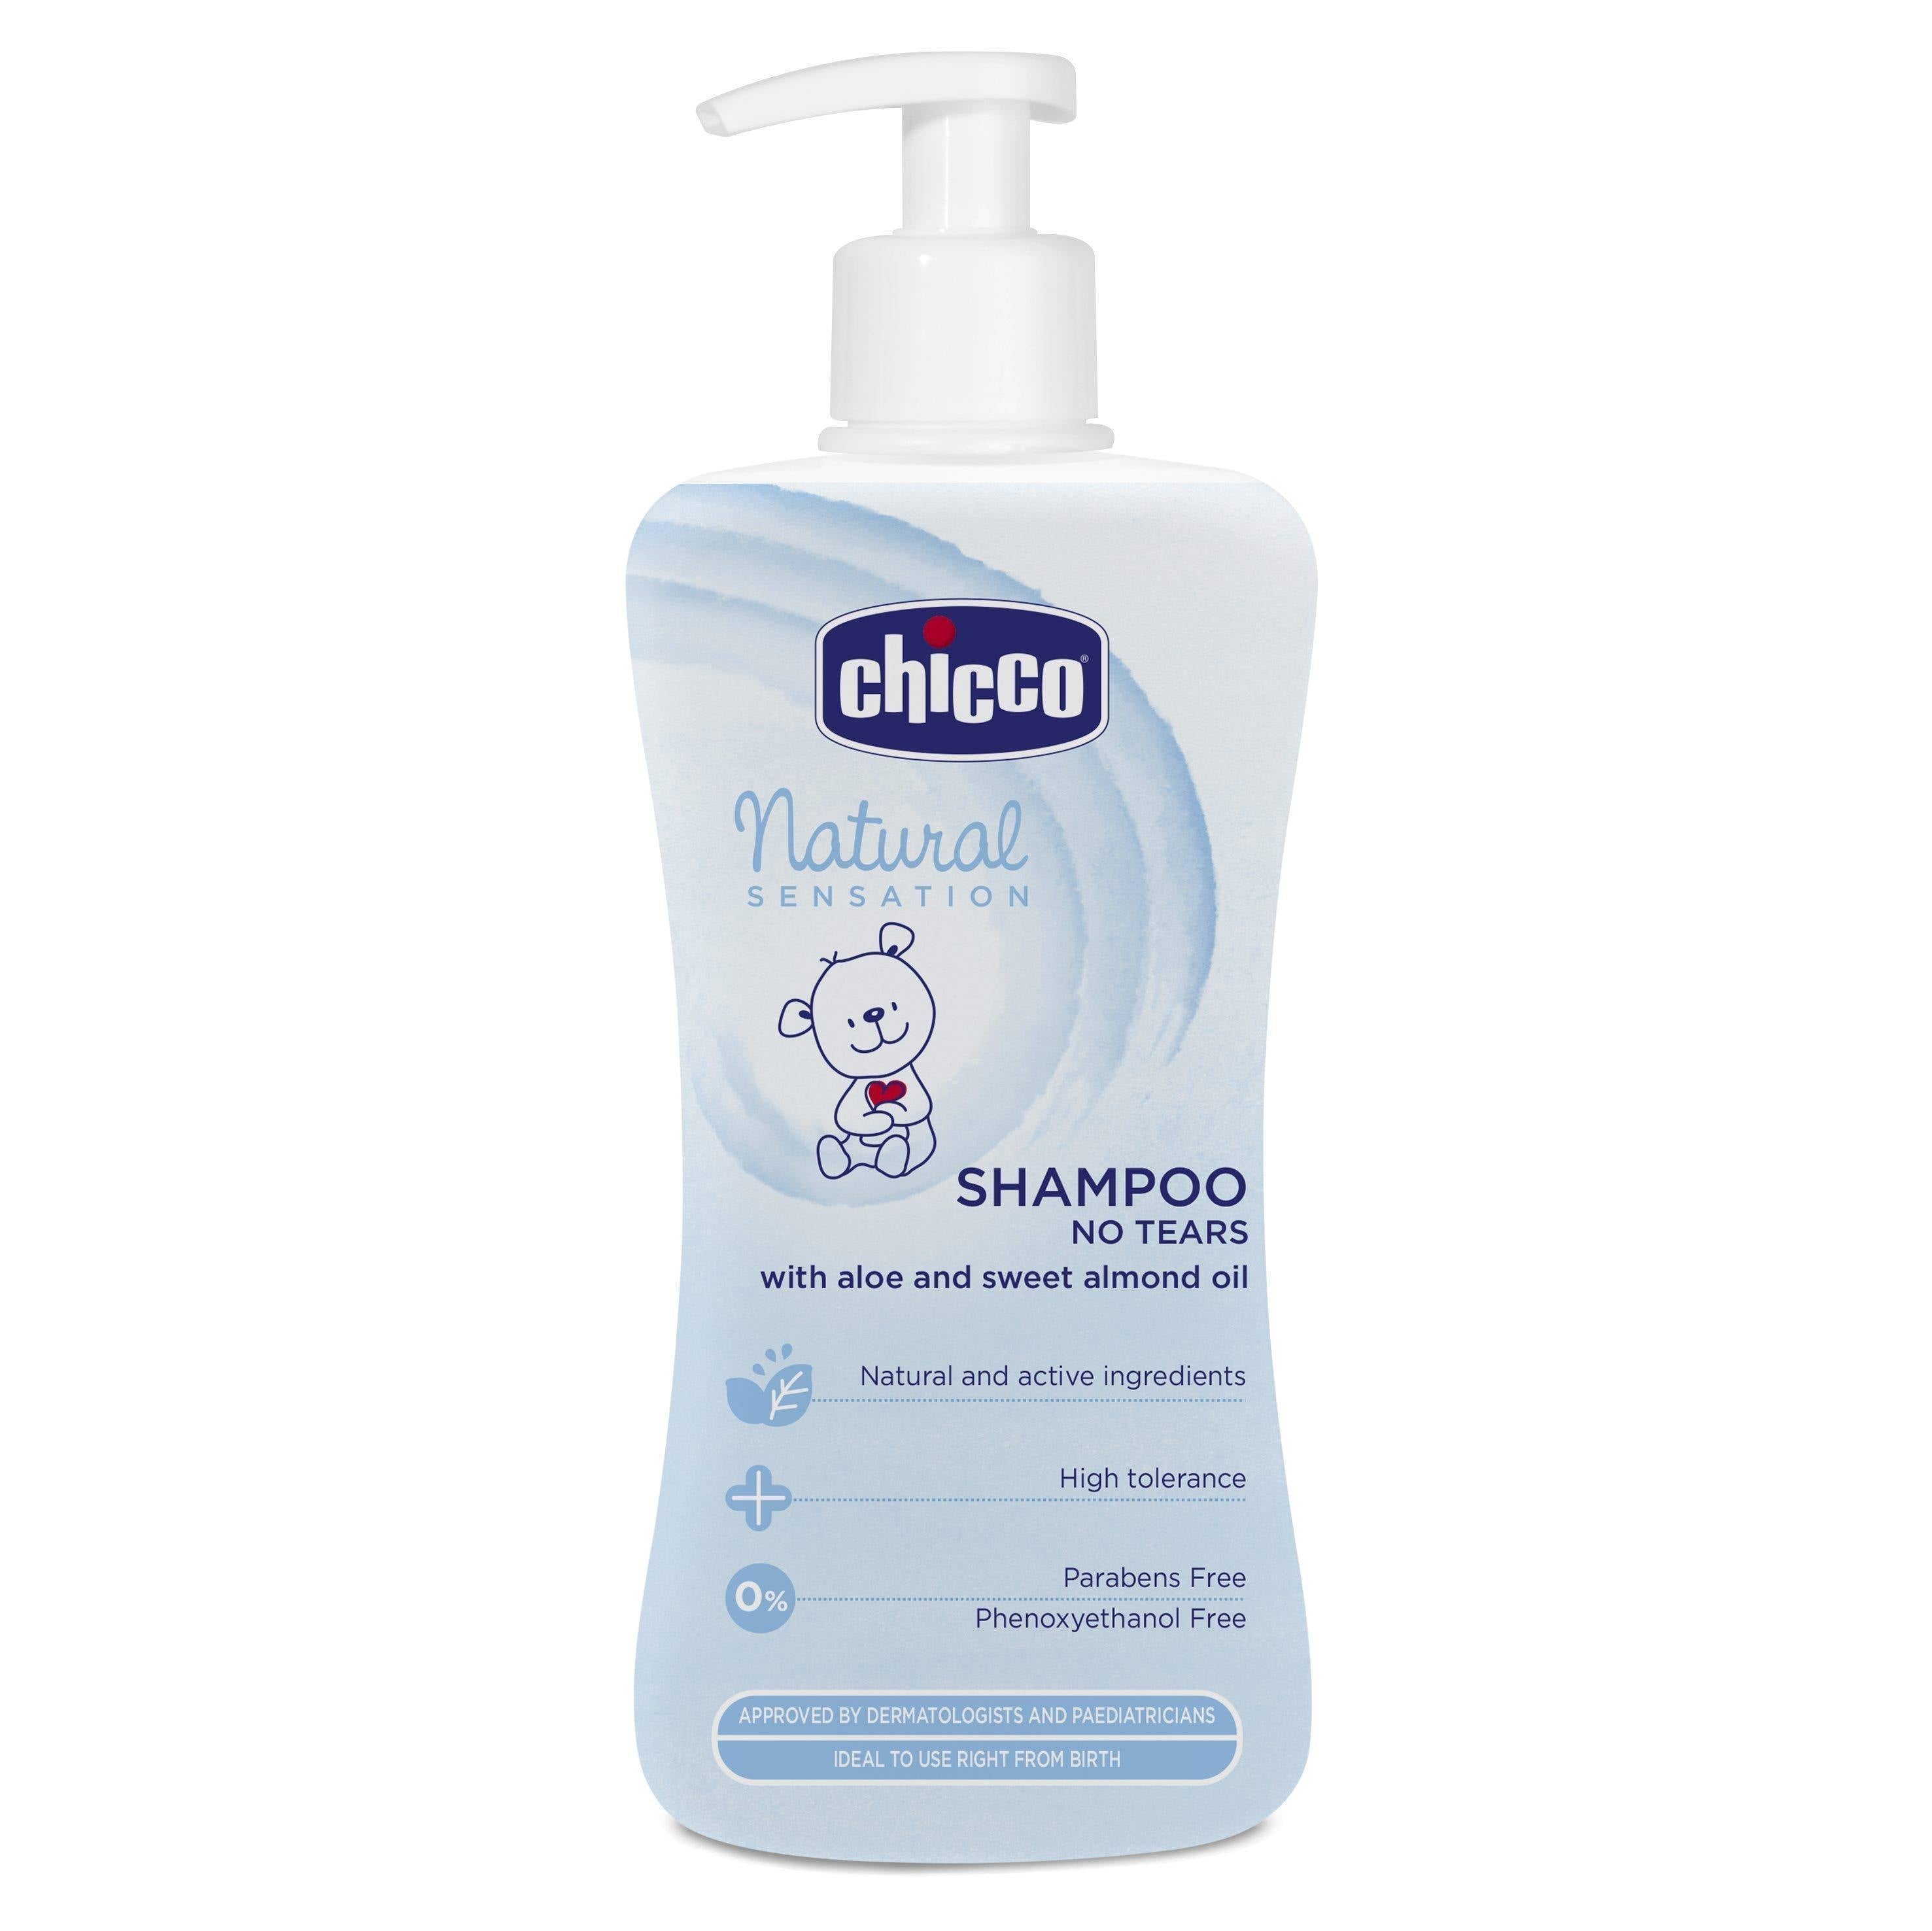 Chicco Shampoo Nat Sens 300Ml Intl - Momeaze